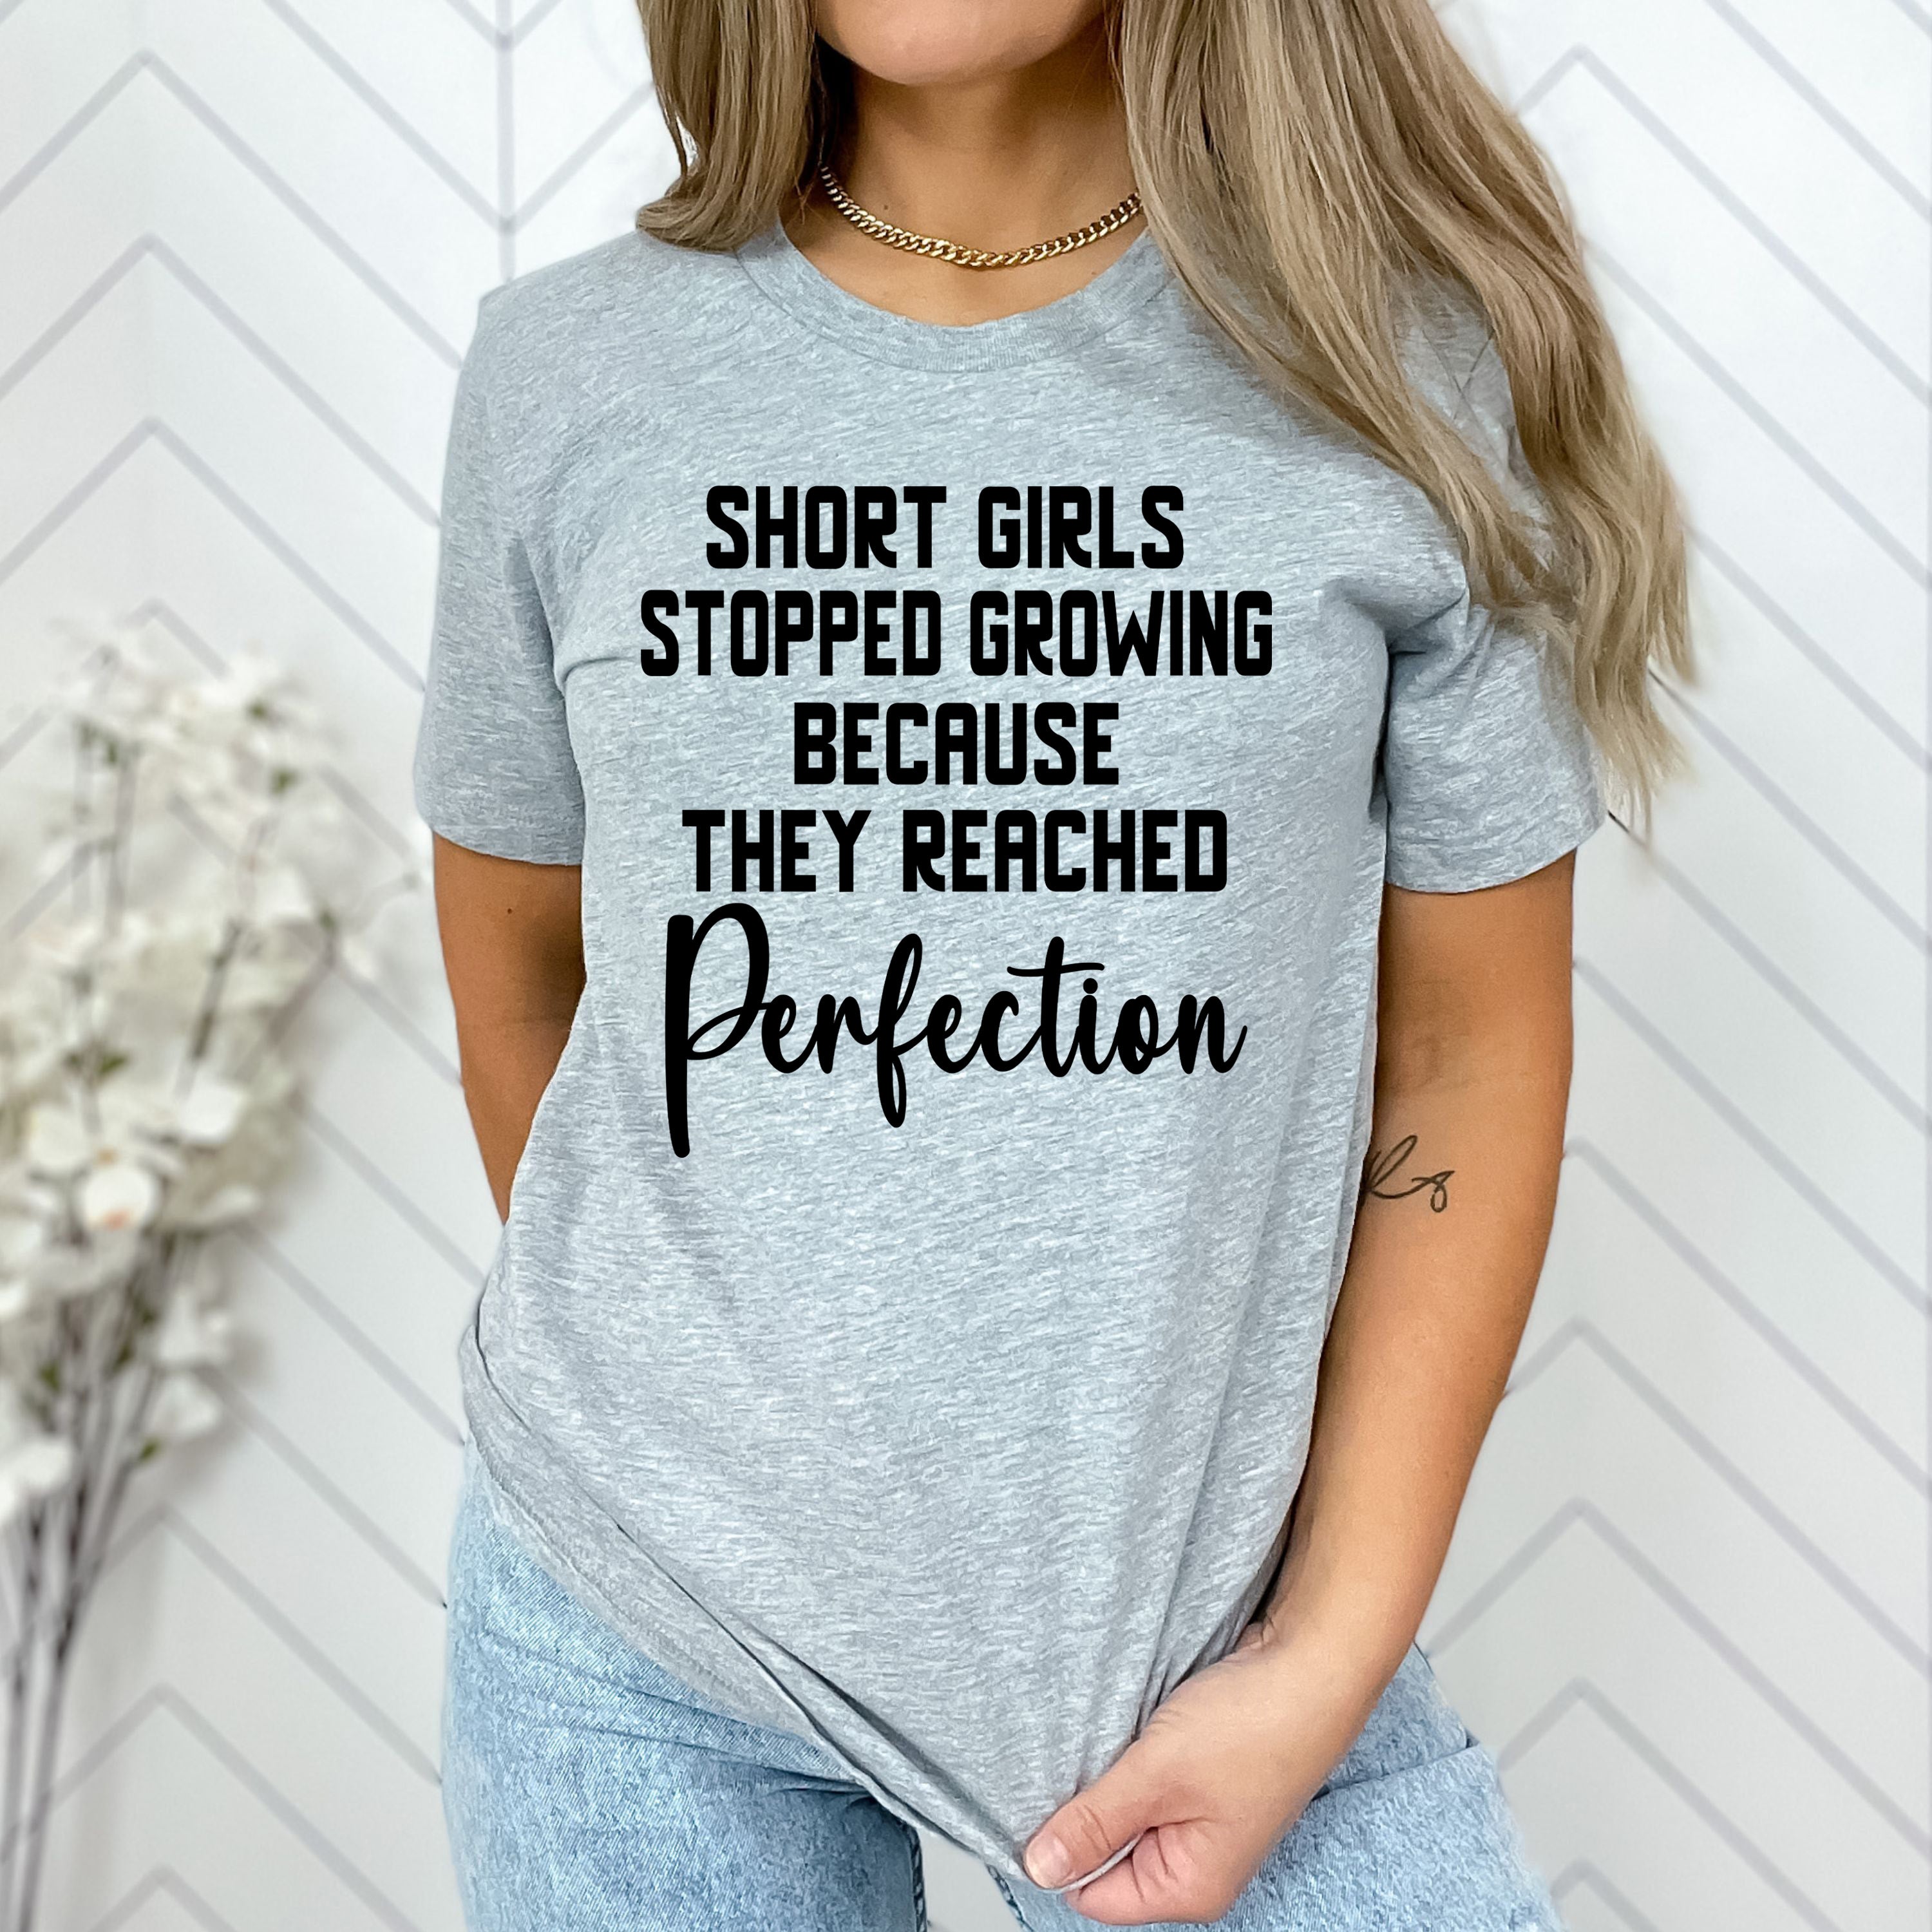 " Short Girls Stopped Growing "